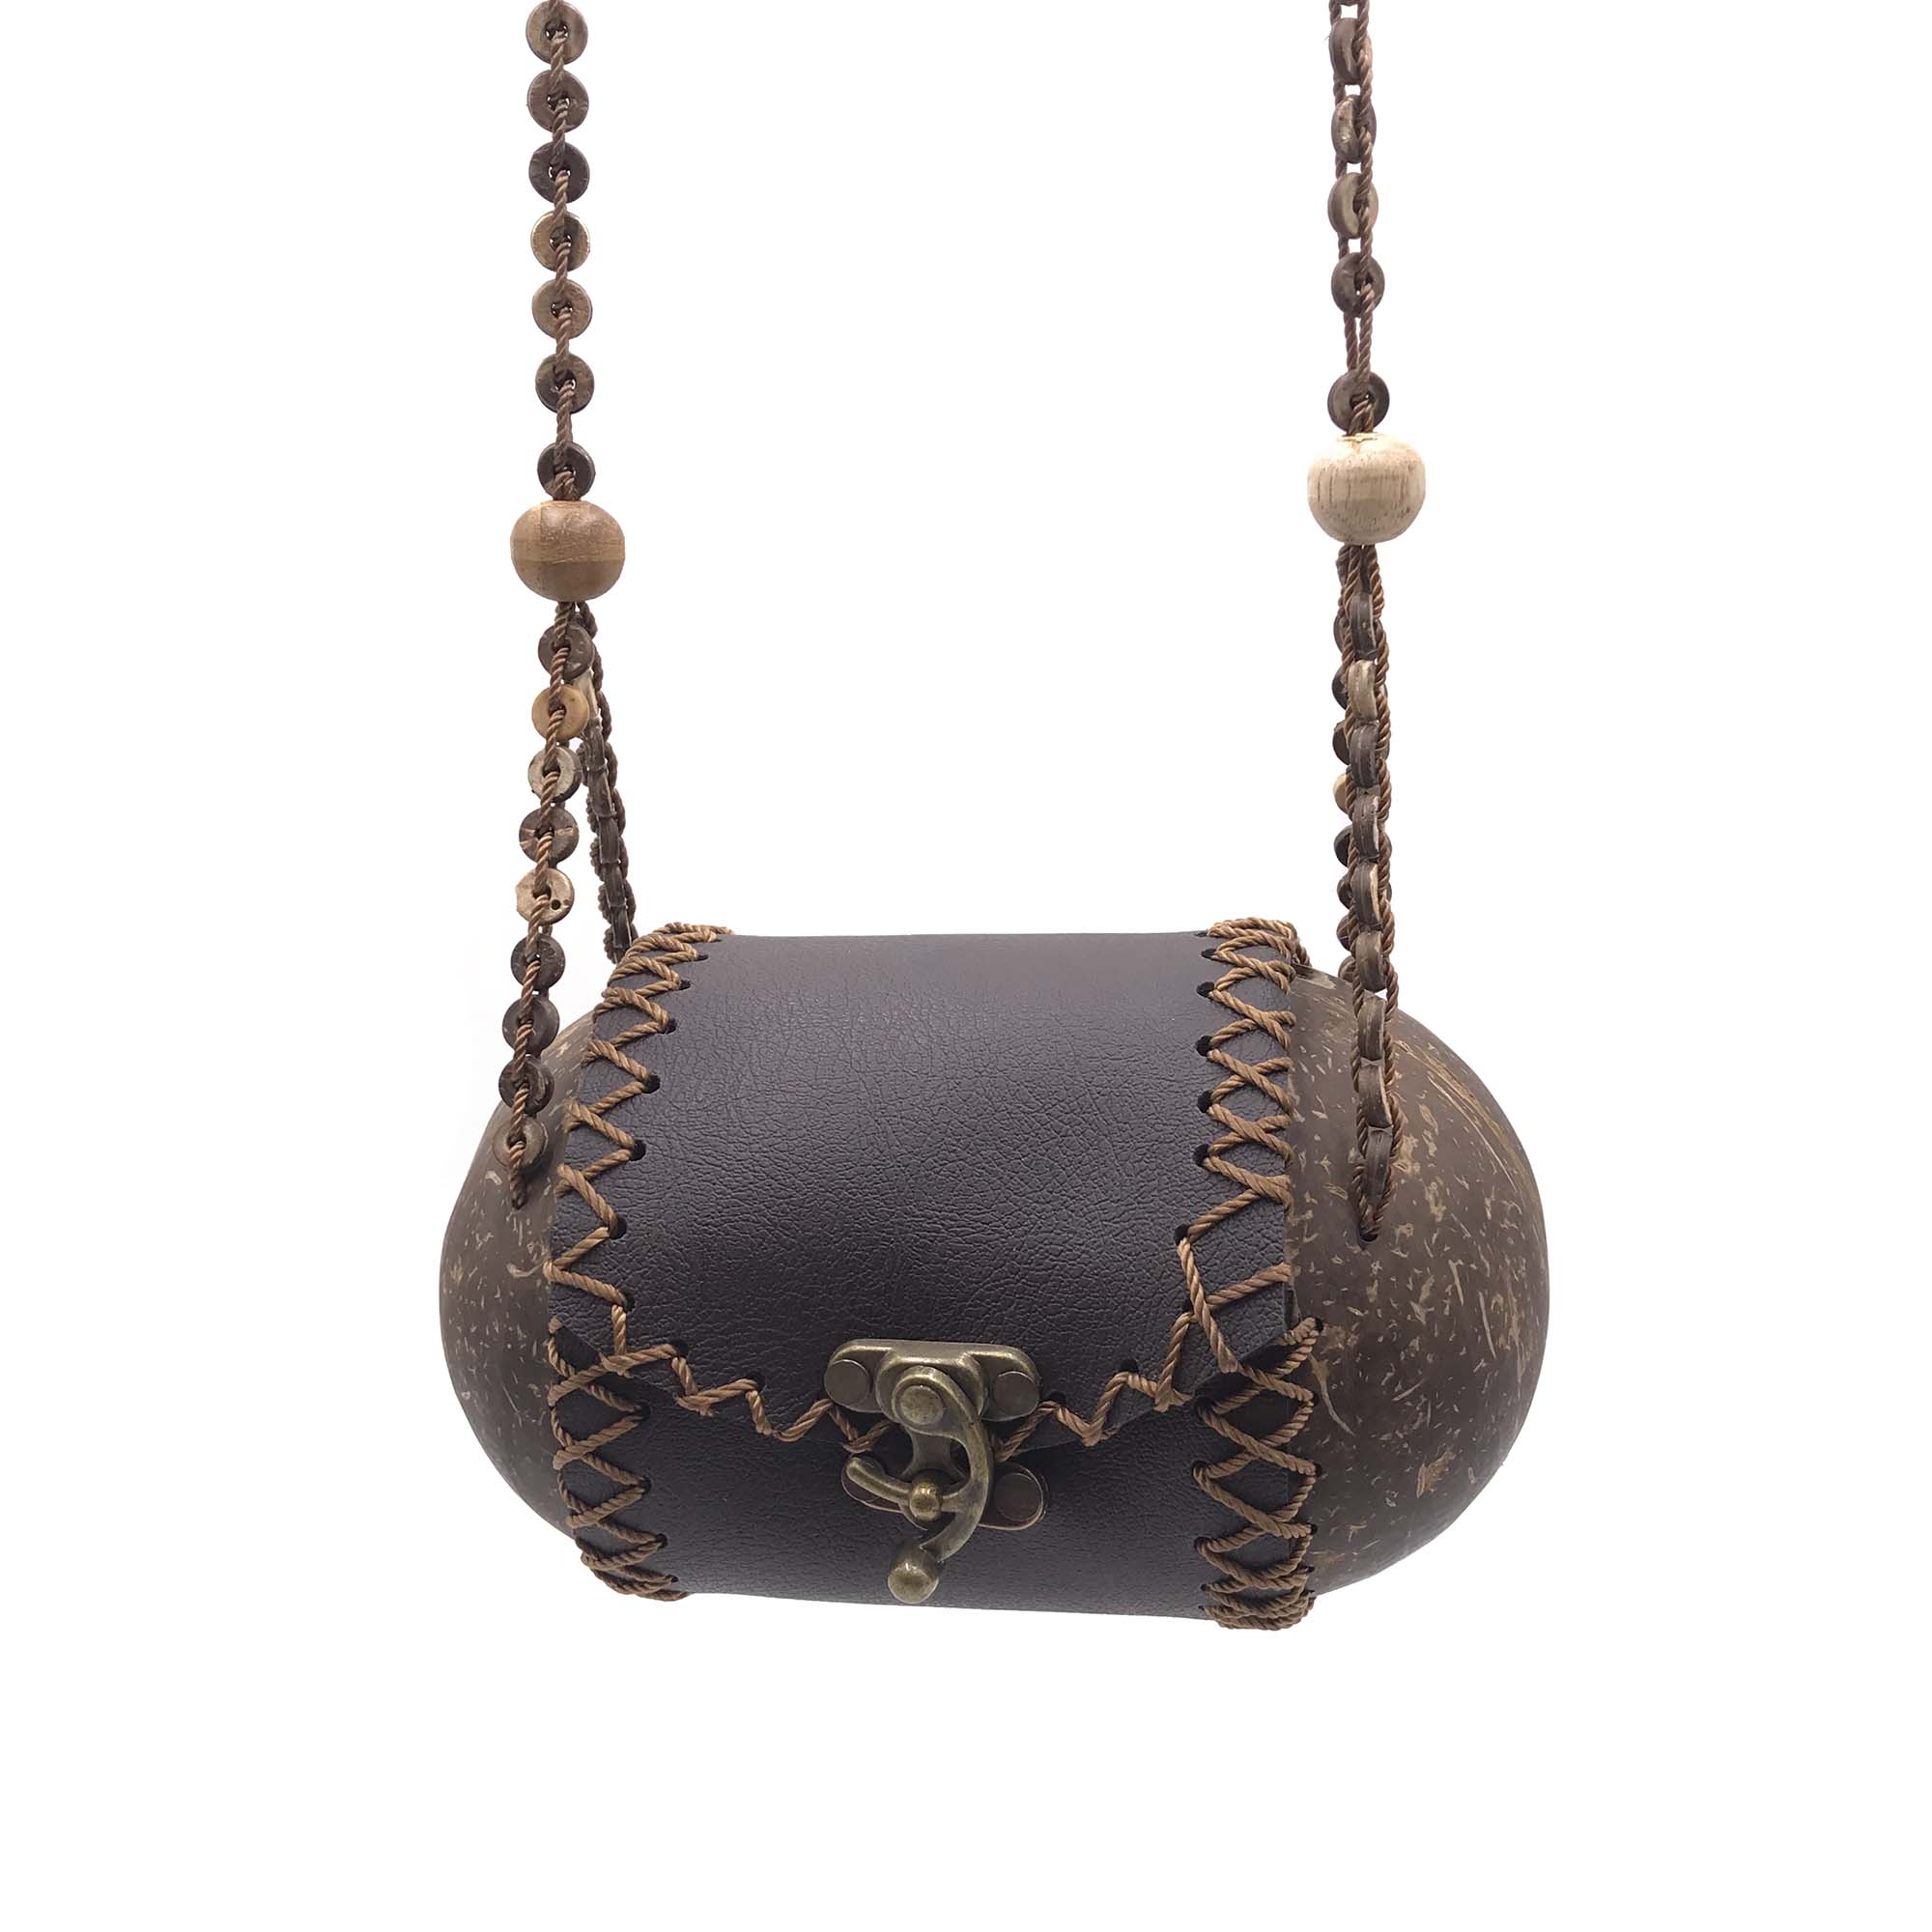 Dancing Danglers' Coconut Shell Mini Handbag